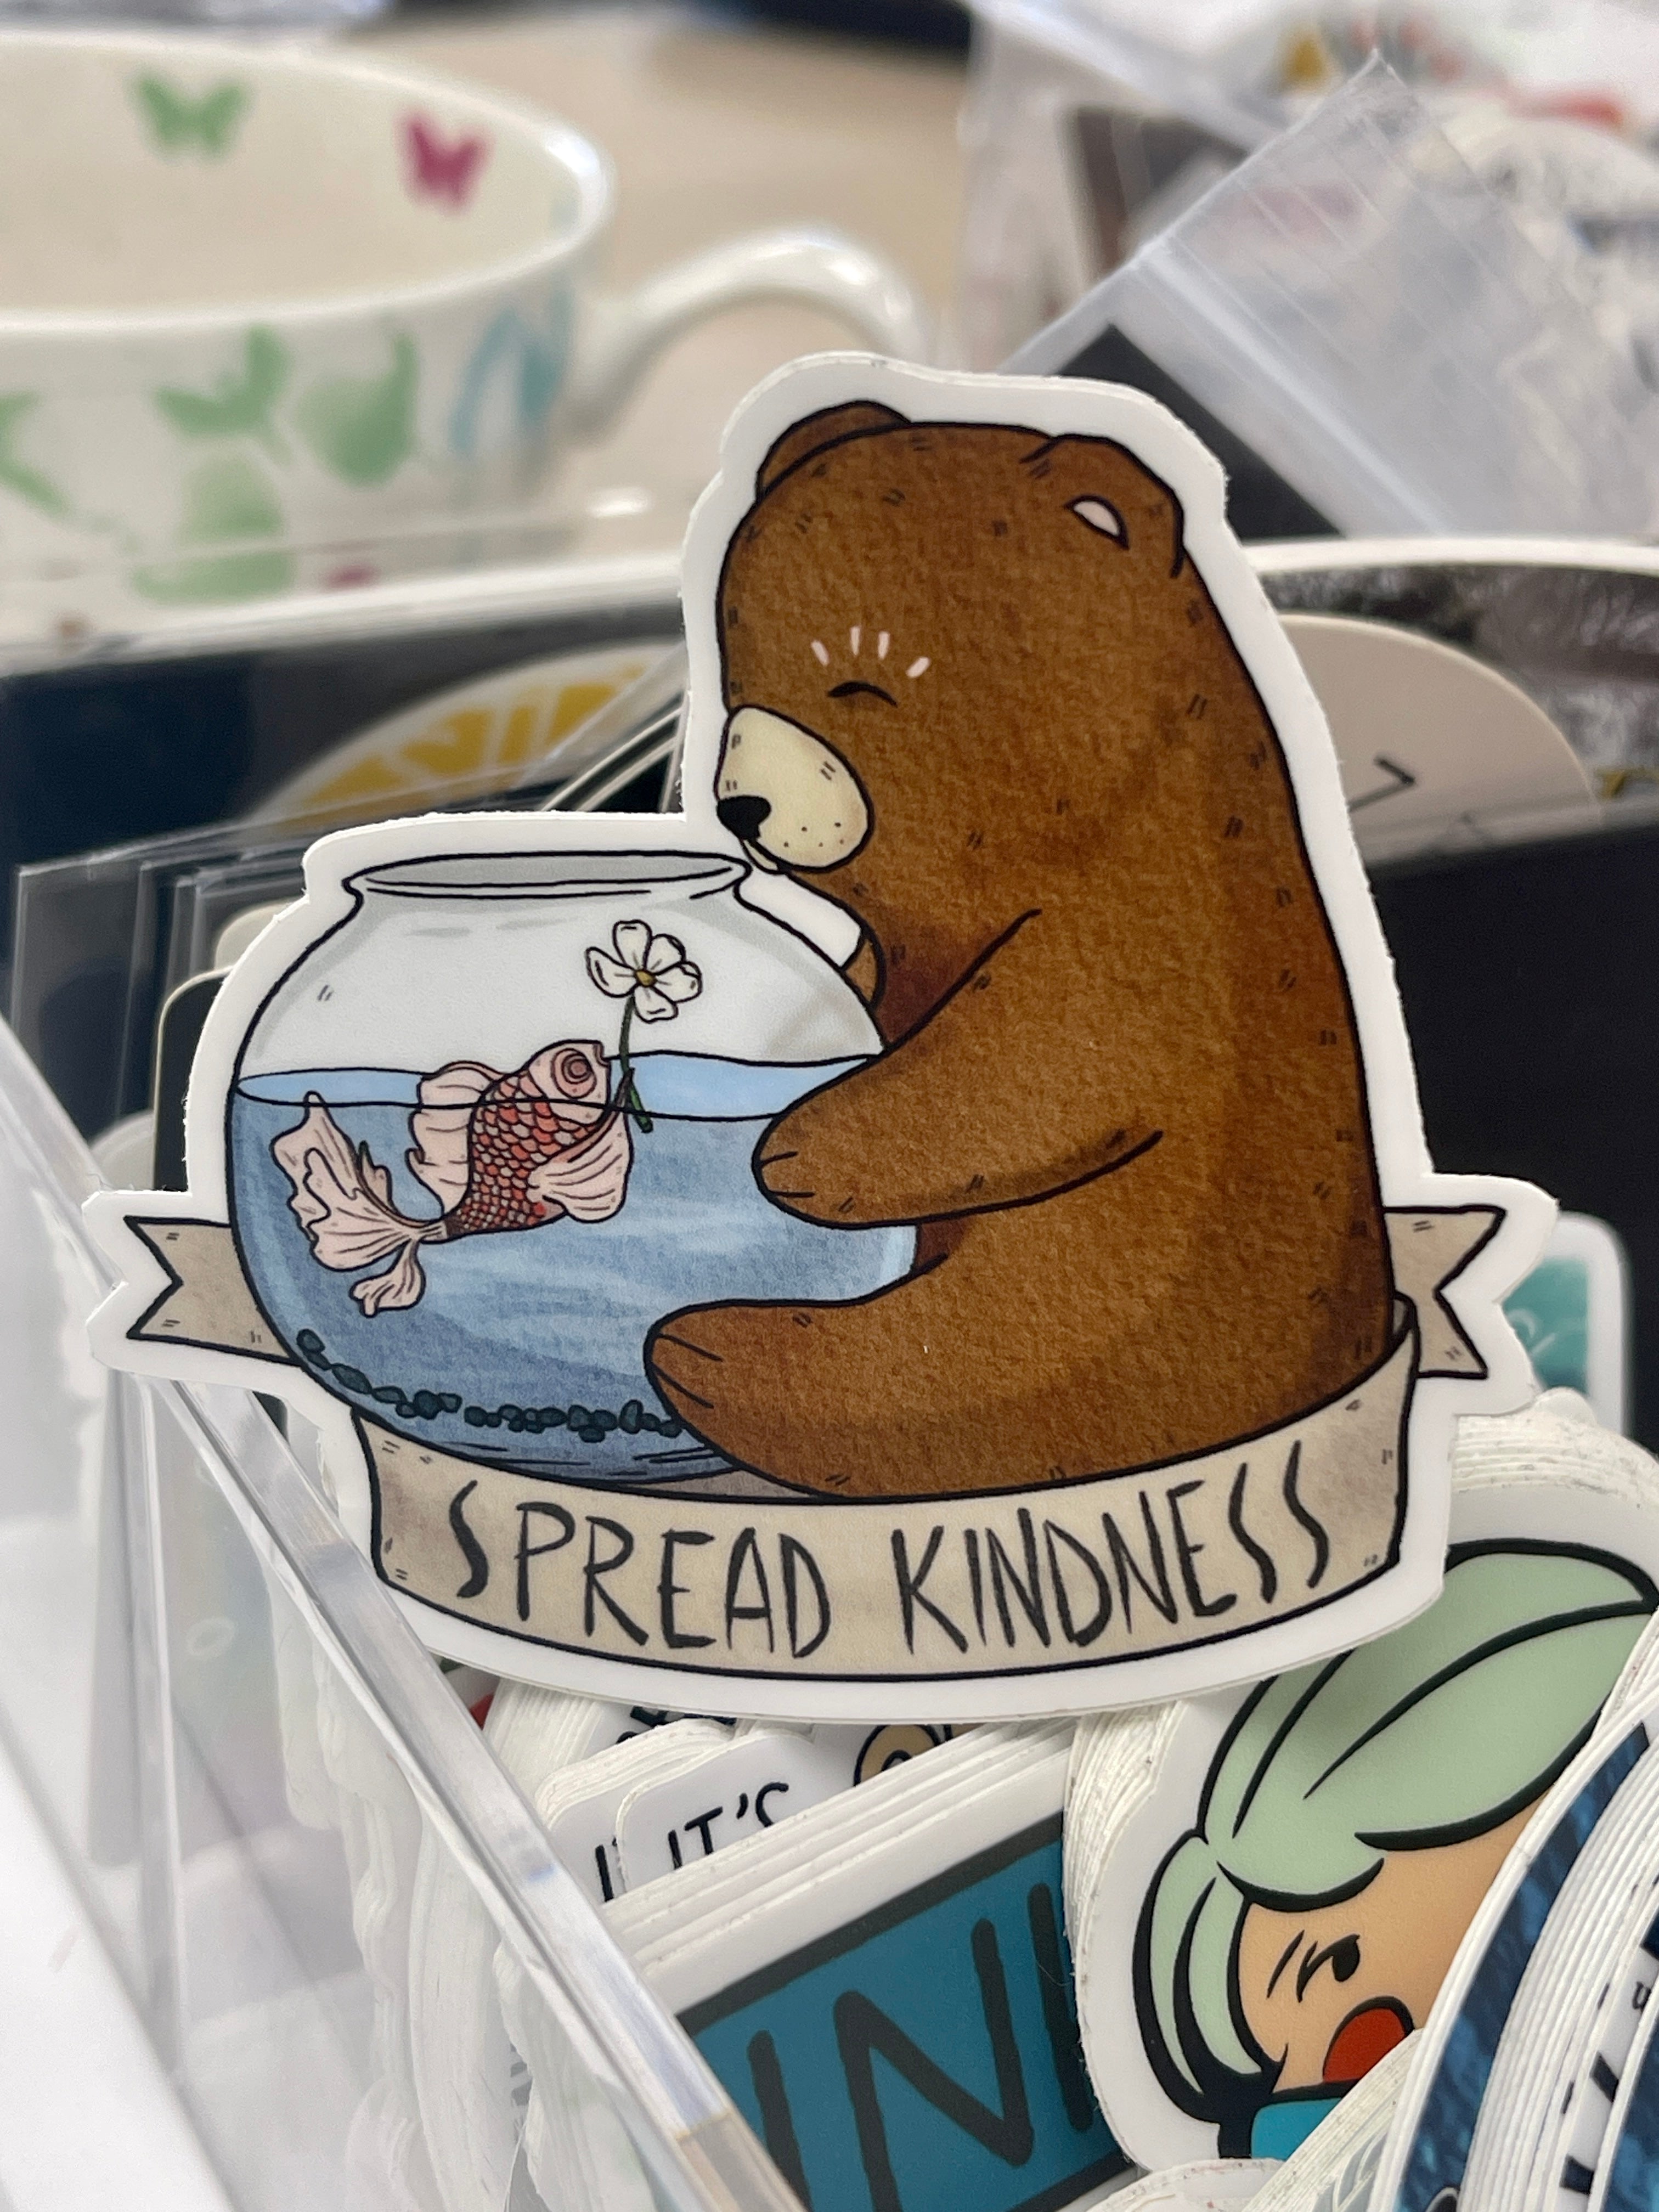 Spread kindness bear